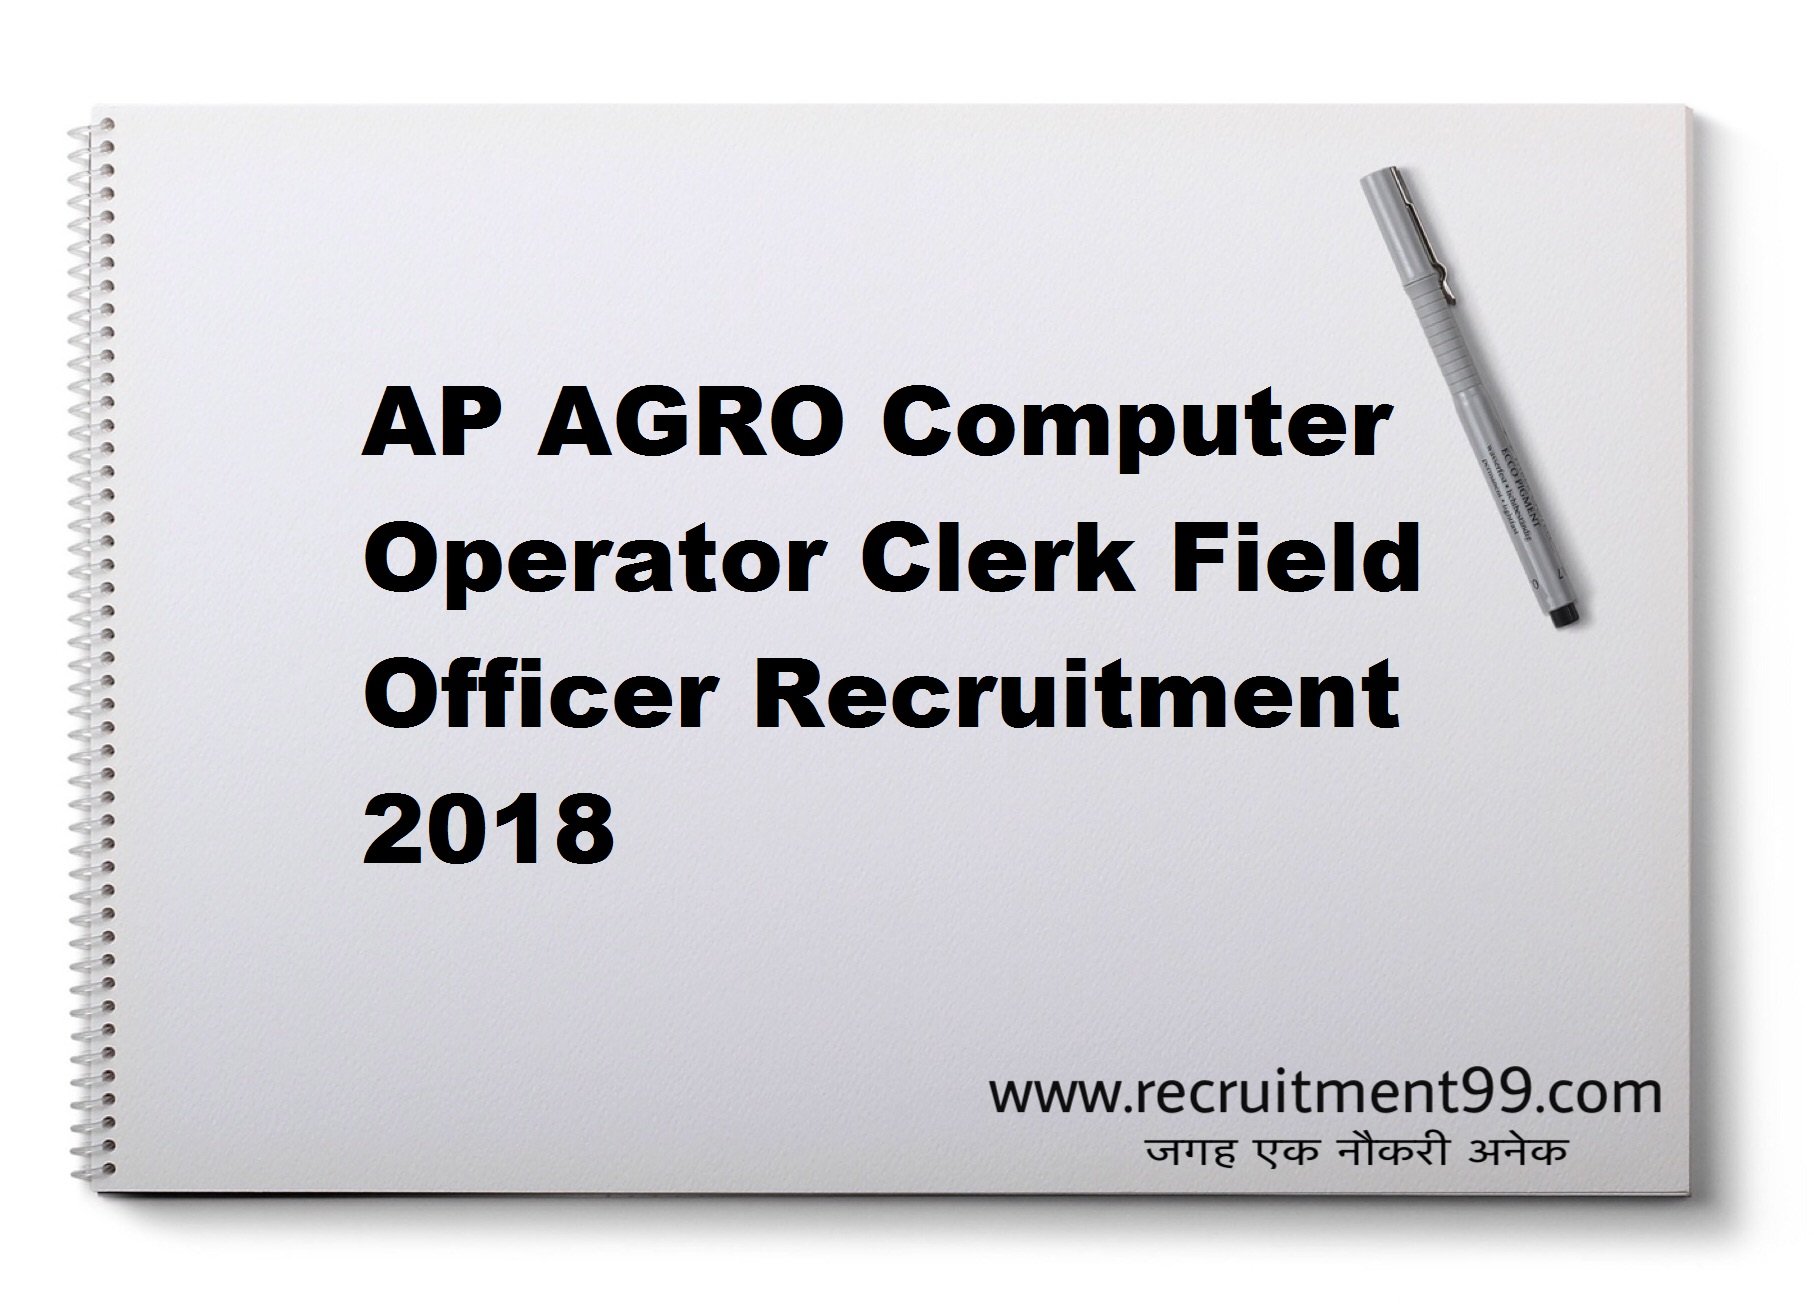 AP AGRO Computer Operator Clerk Field officer Recruitment Admit Card Result 2018